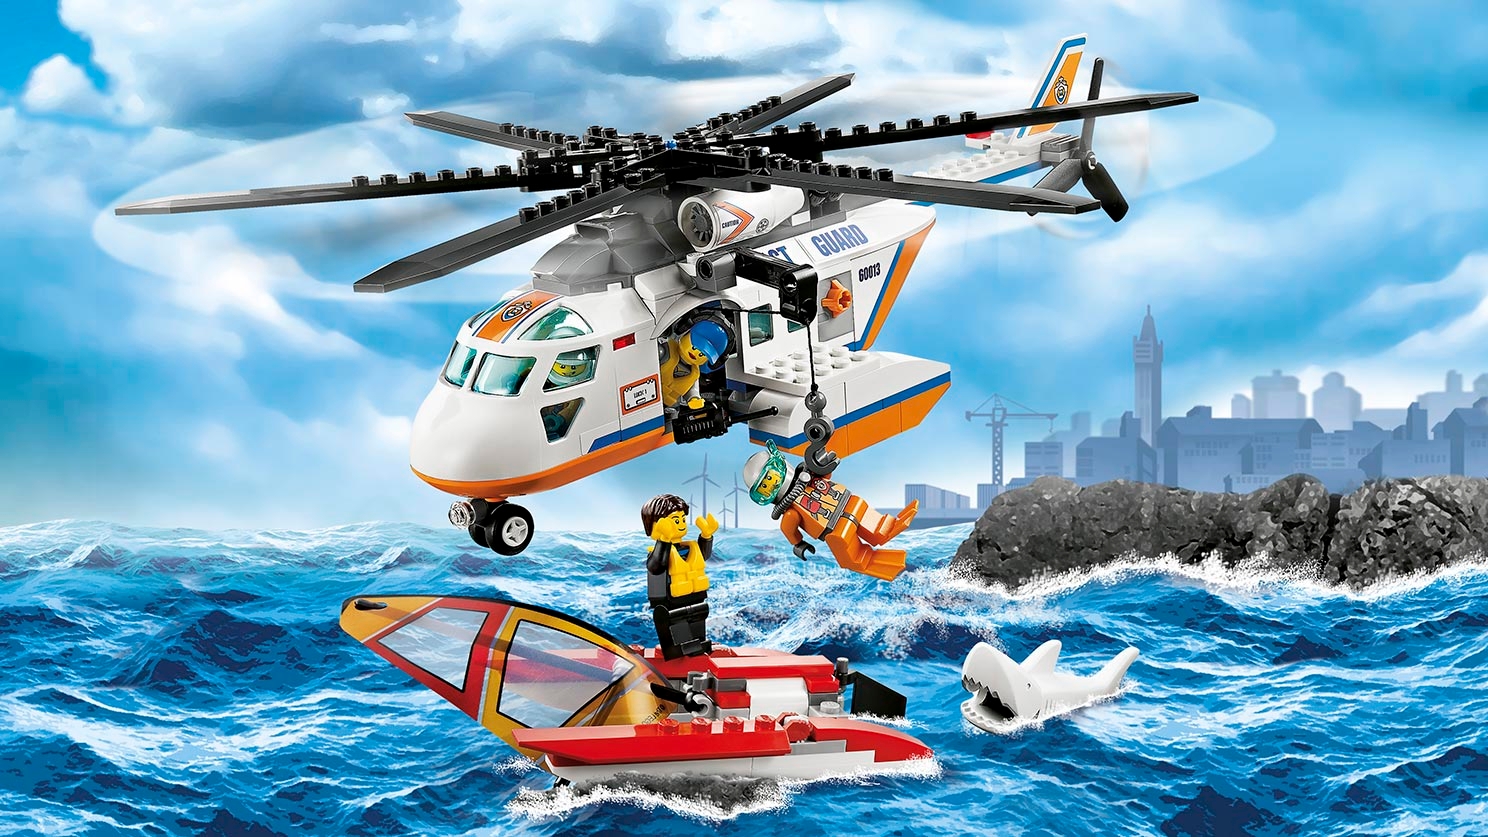 Coast Guard Helicopter 60013 - City Sets - LEGO.com for kids